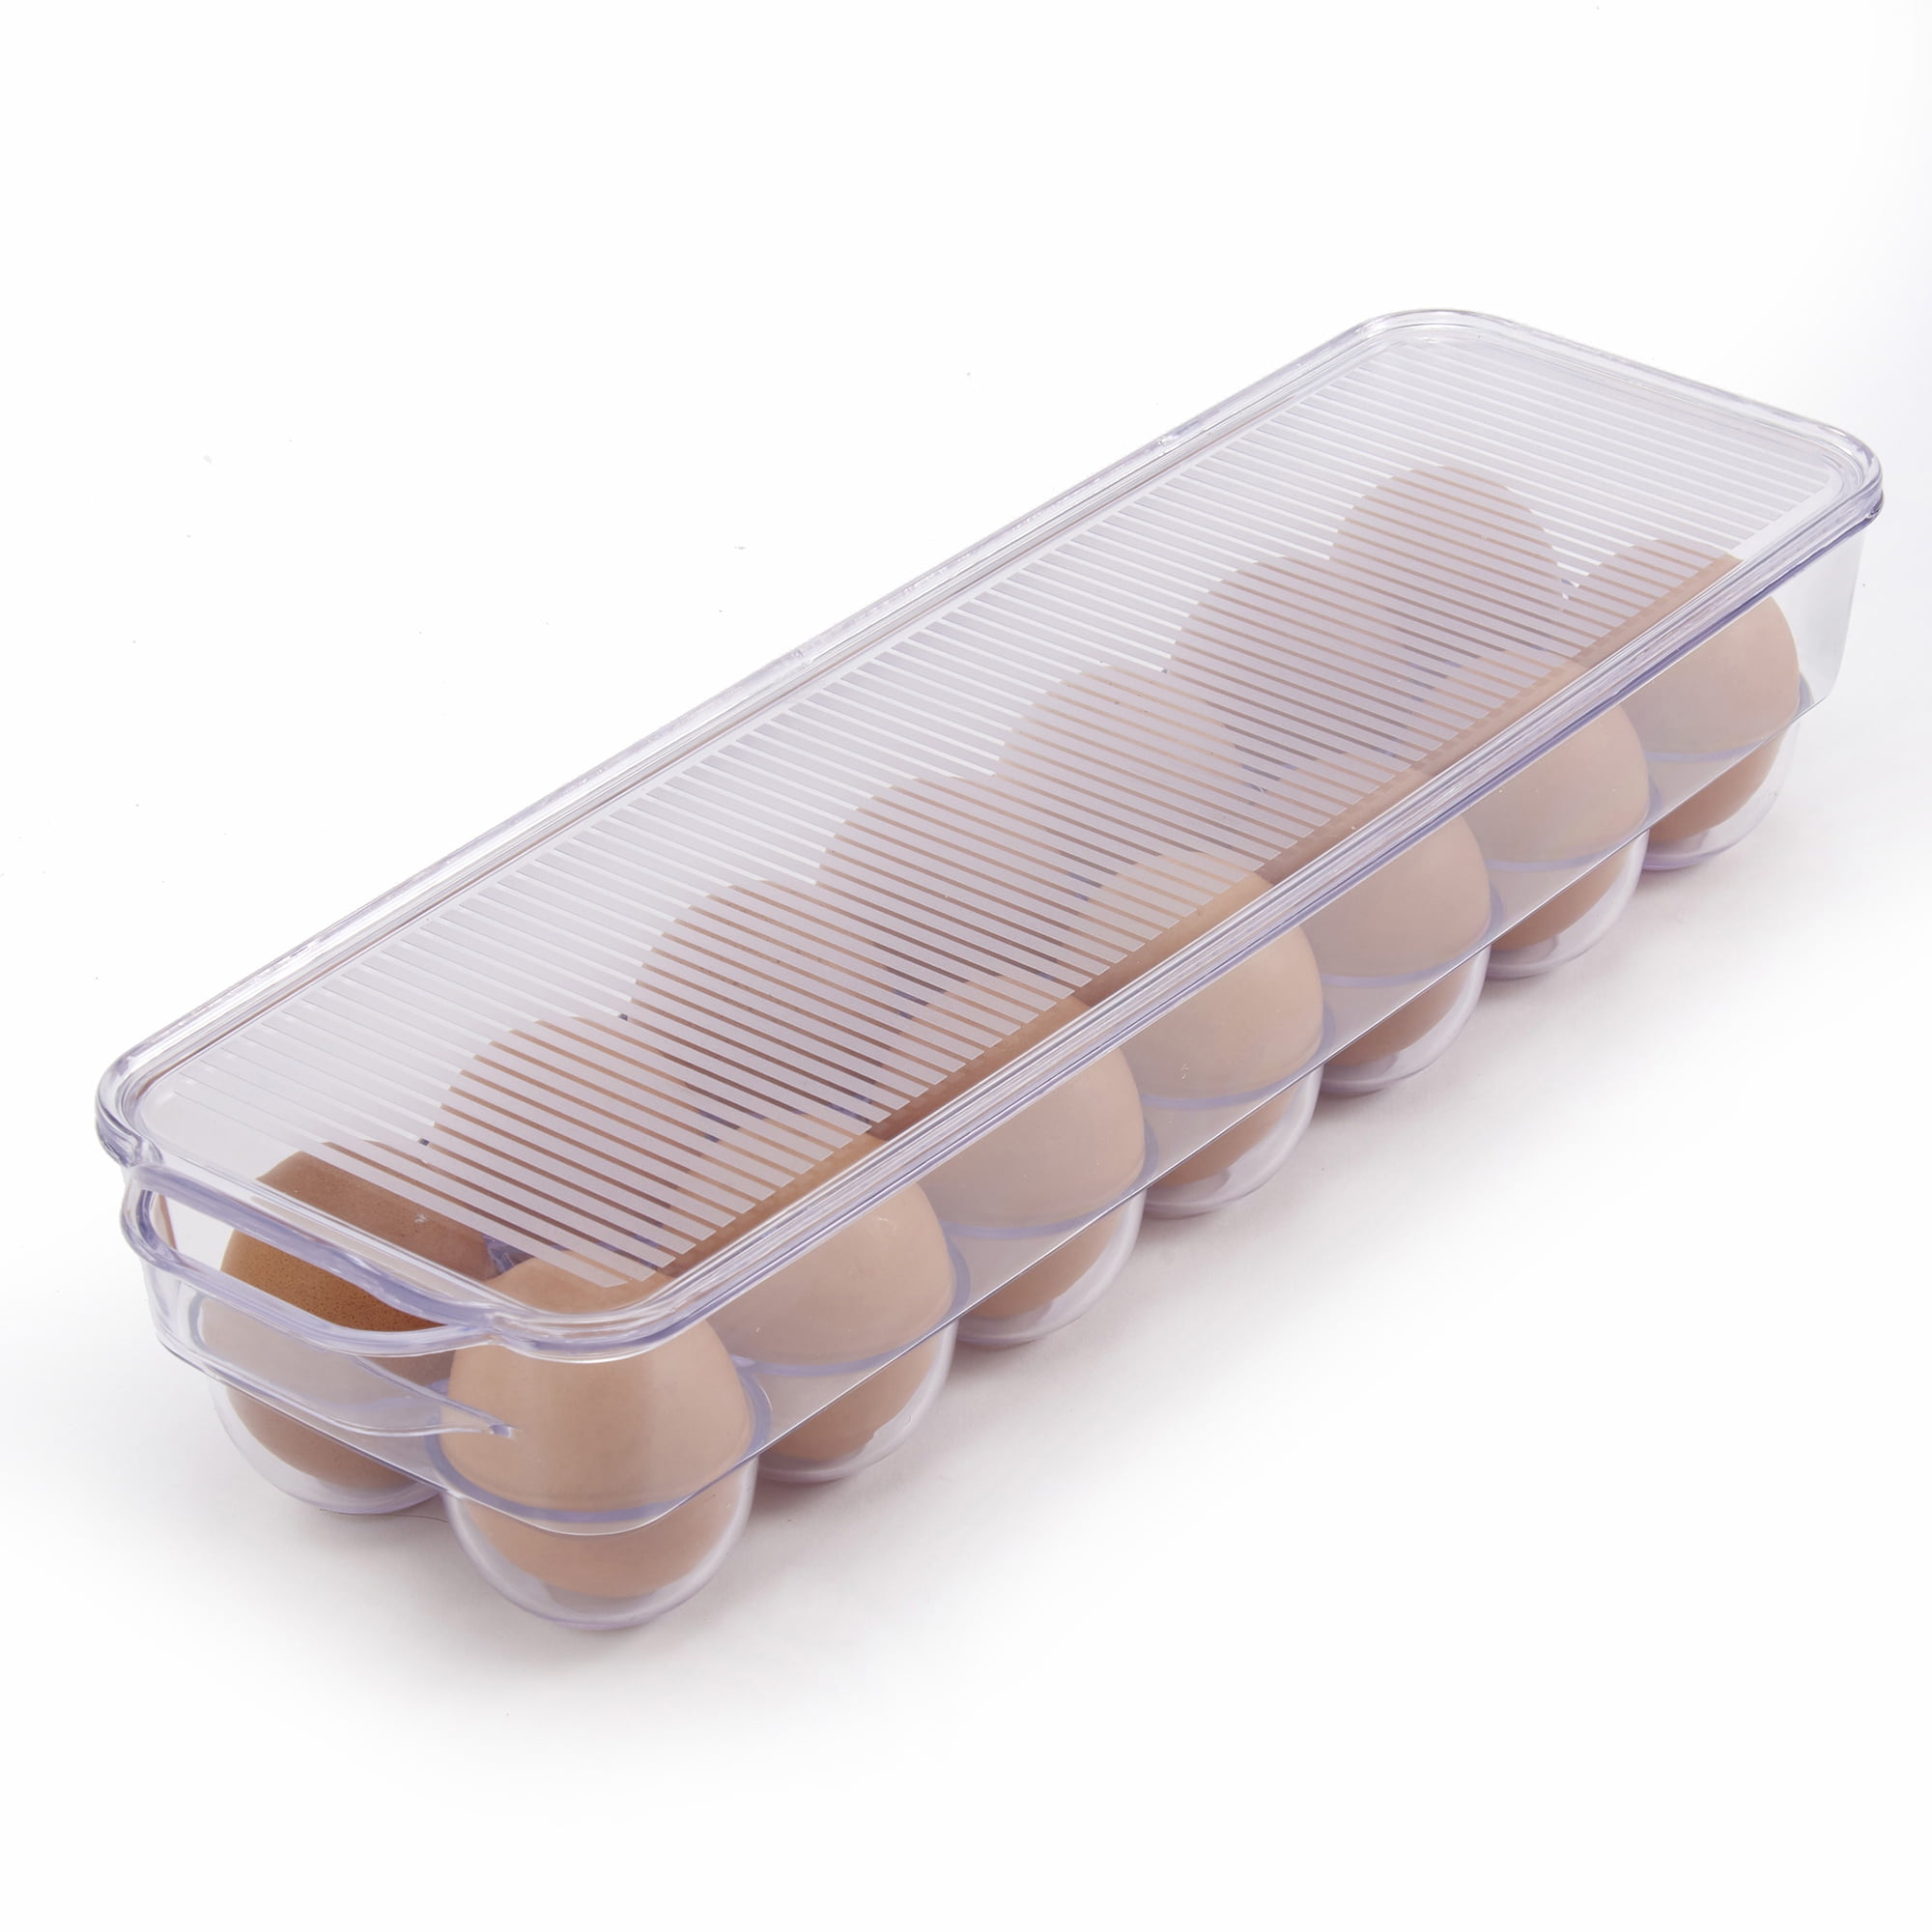 Mainstays Clear Plastic Fridge Organization Bin 4-Pack Set, Various Sizes